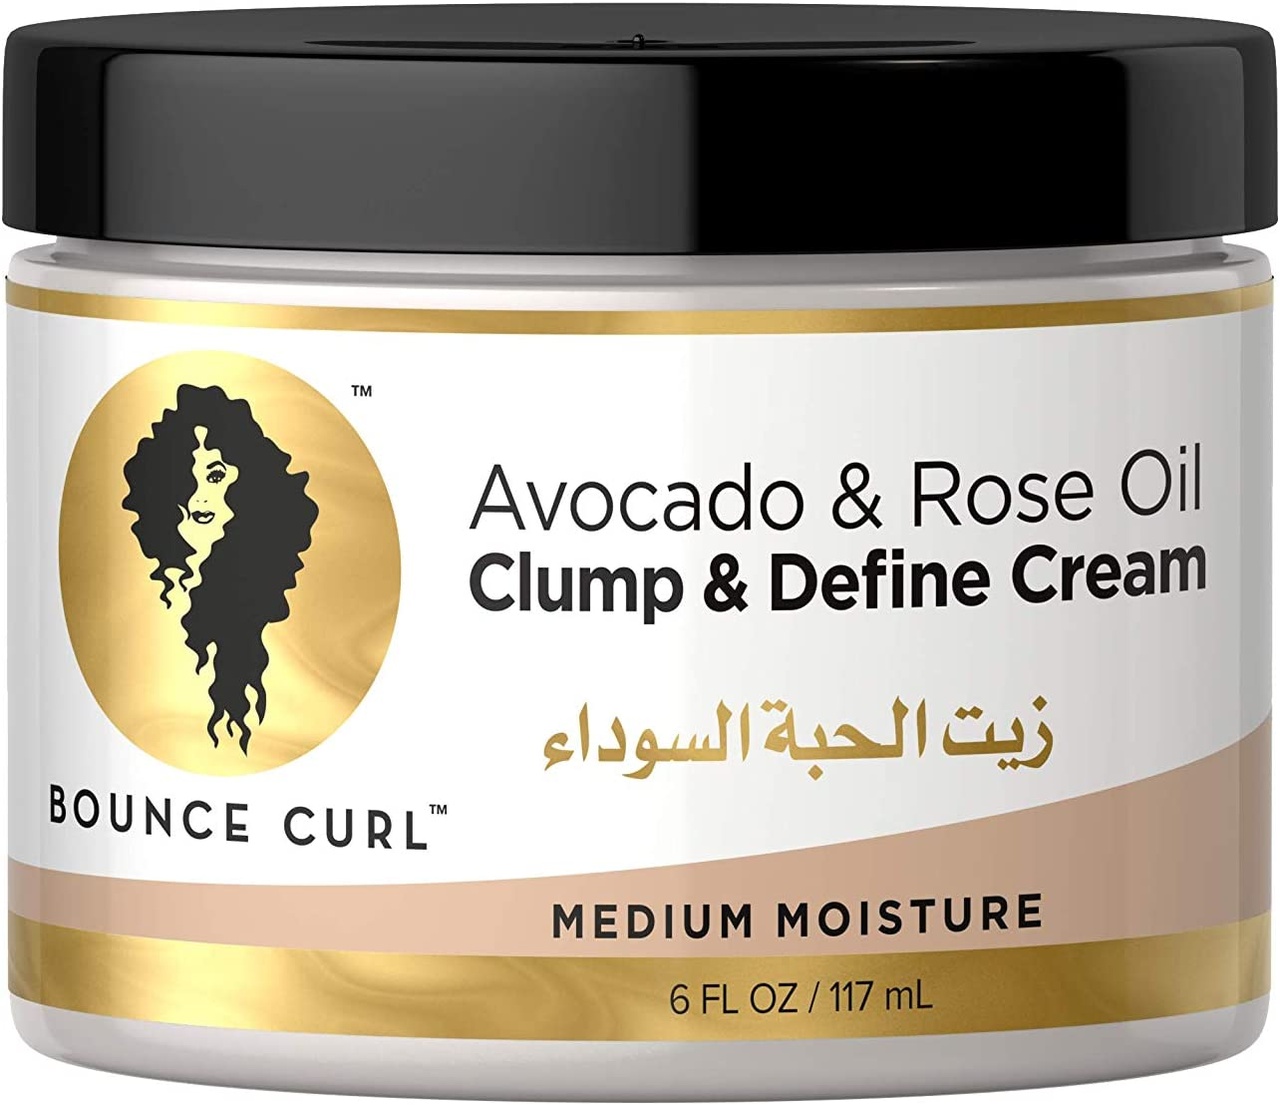 Bounce Curl Avocado & Rose Oil Clump and Define Cream 177ml